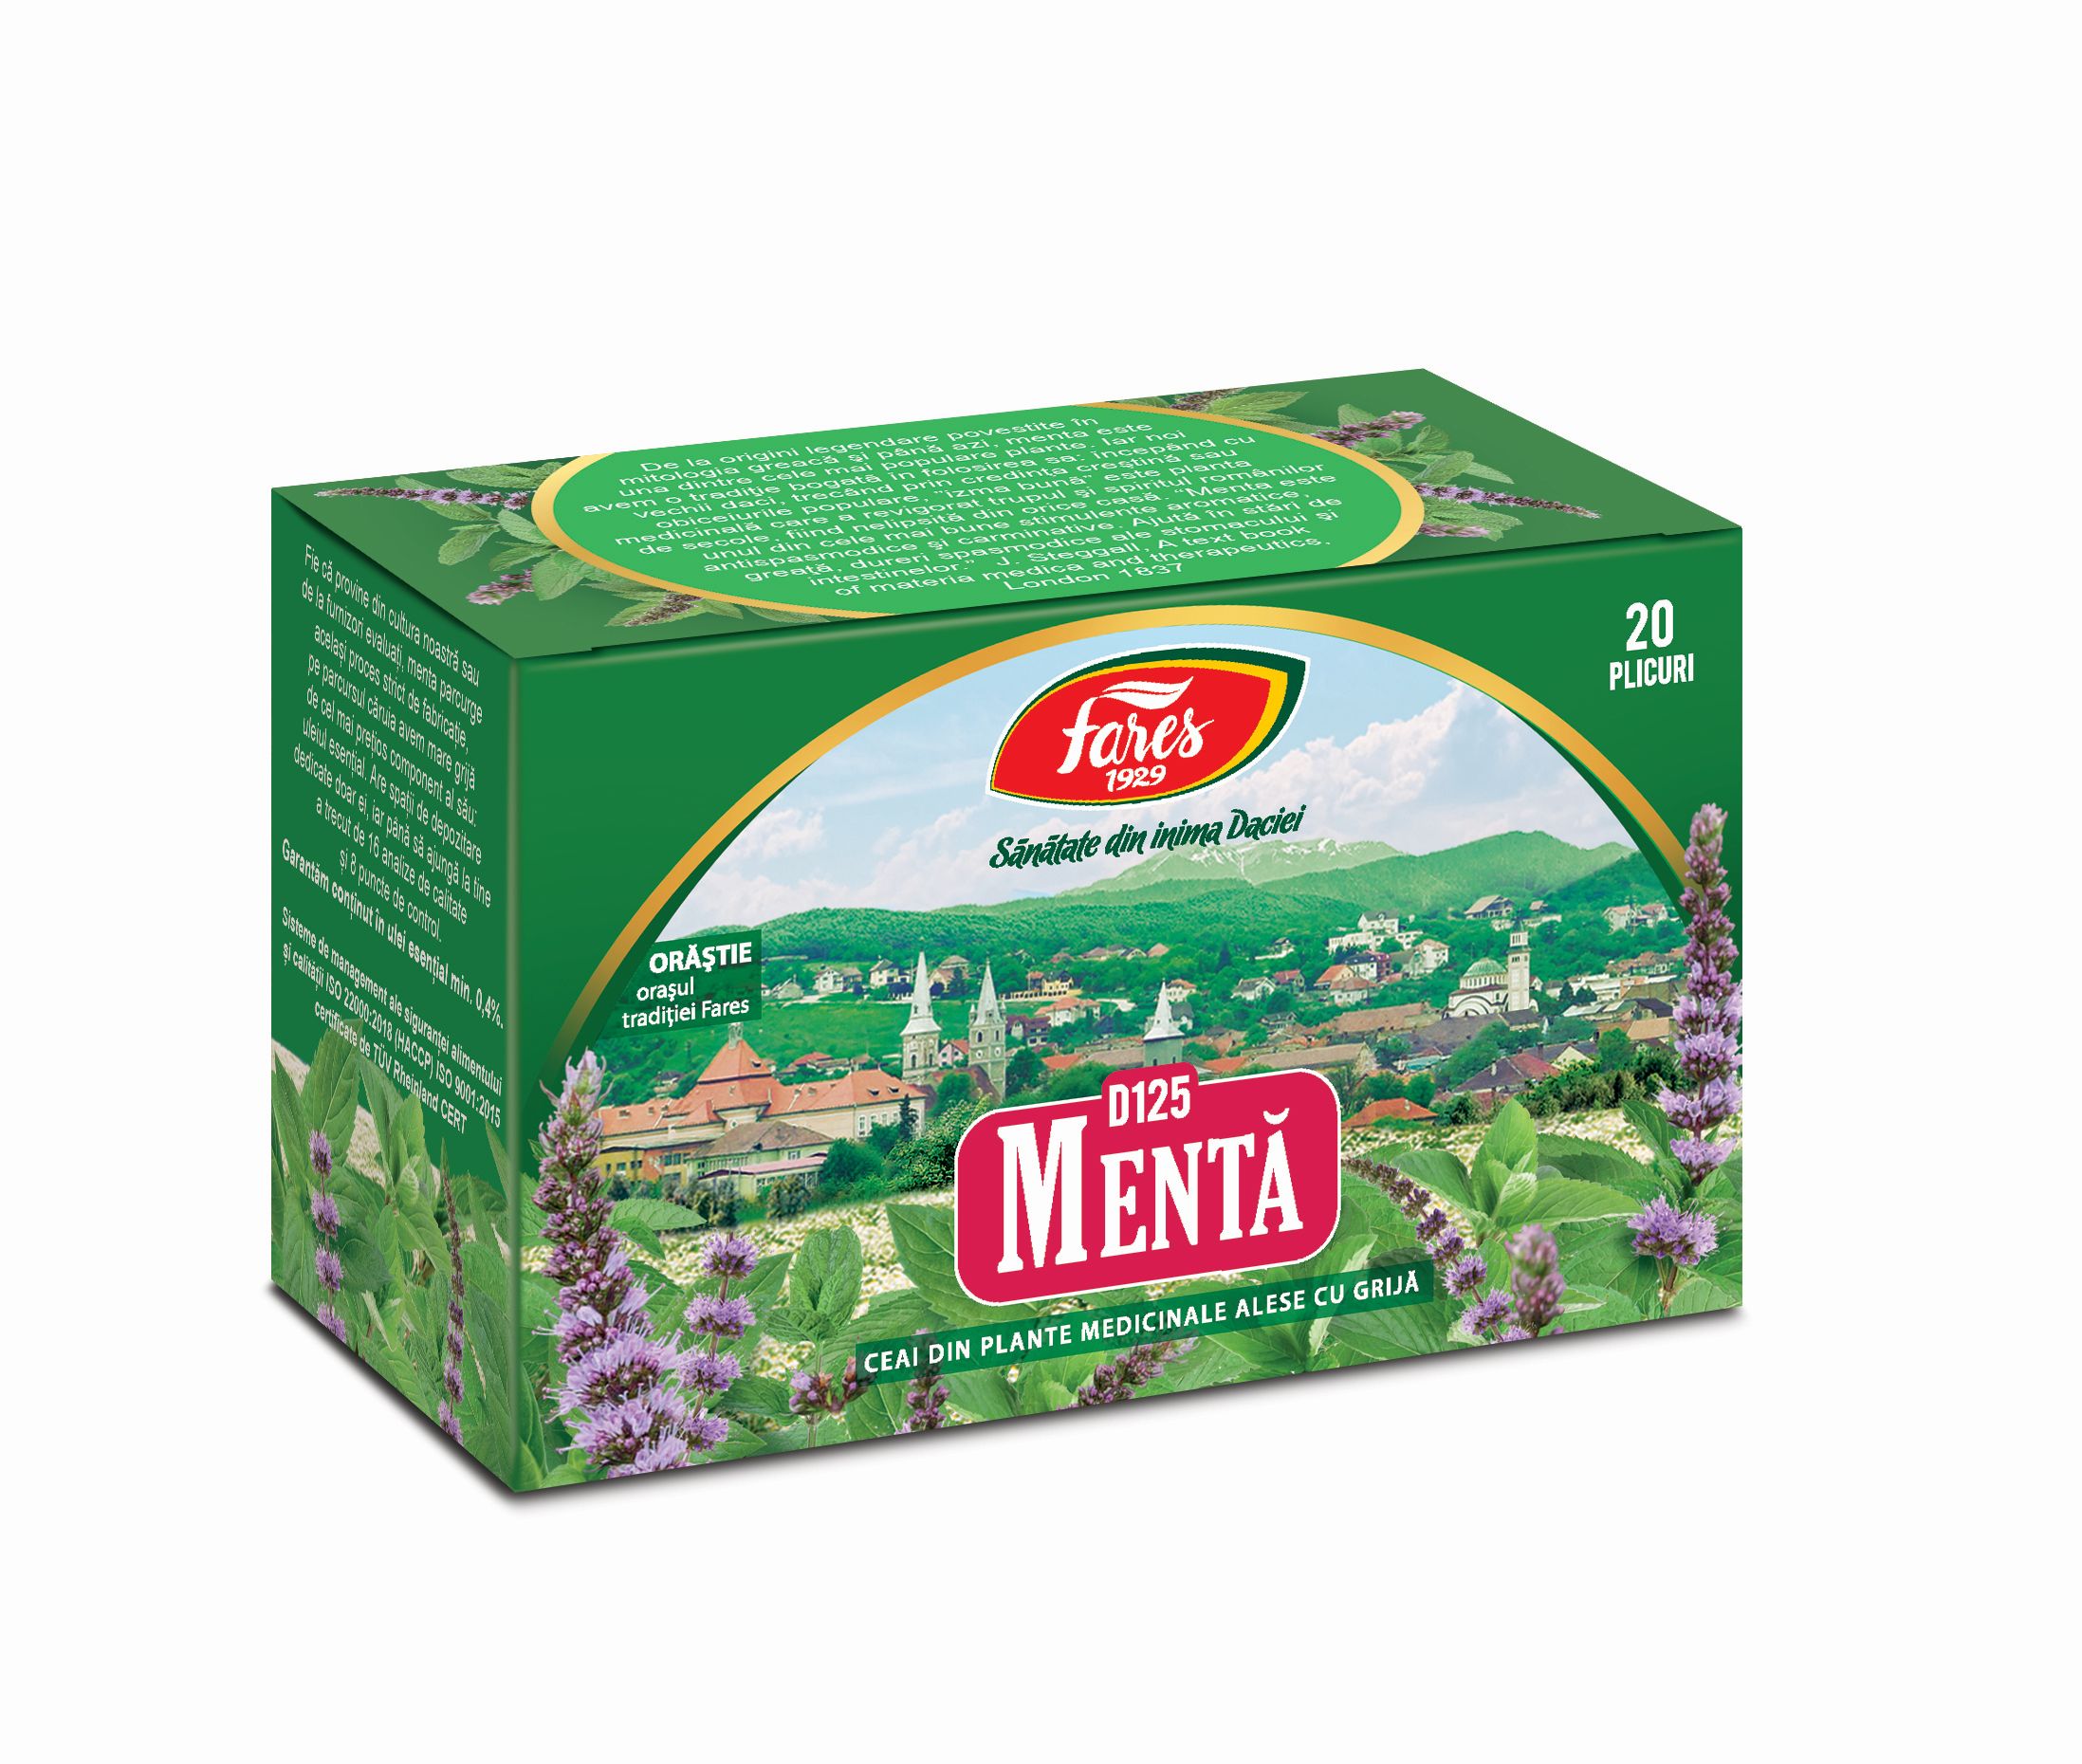 Ceaiuri - Fares ceai menta x 20 plicuri, medik-on.ro